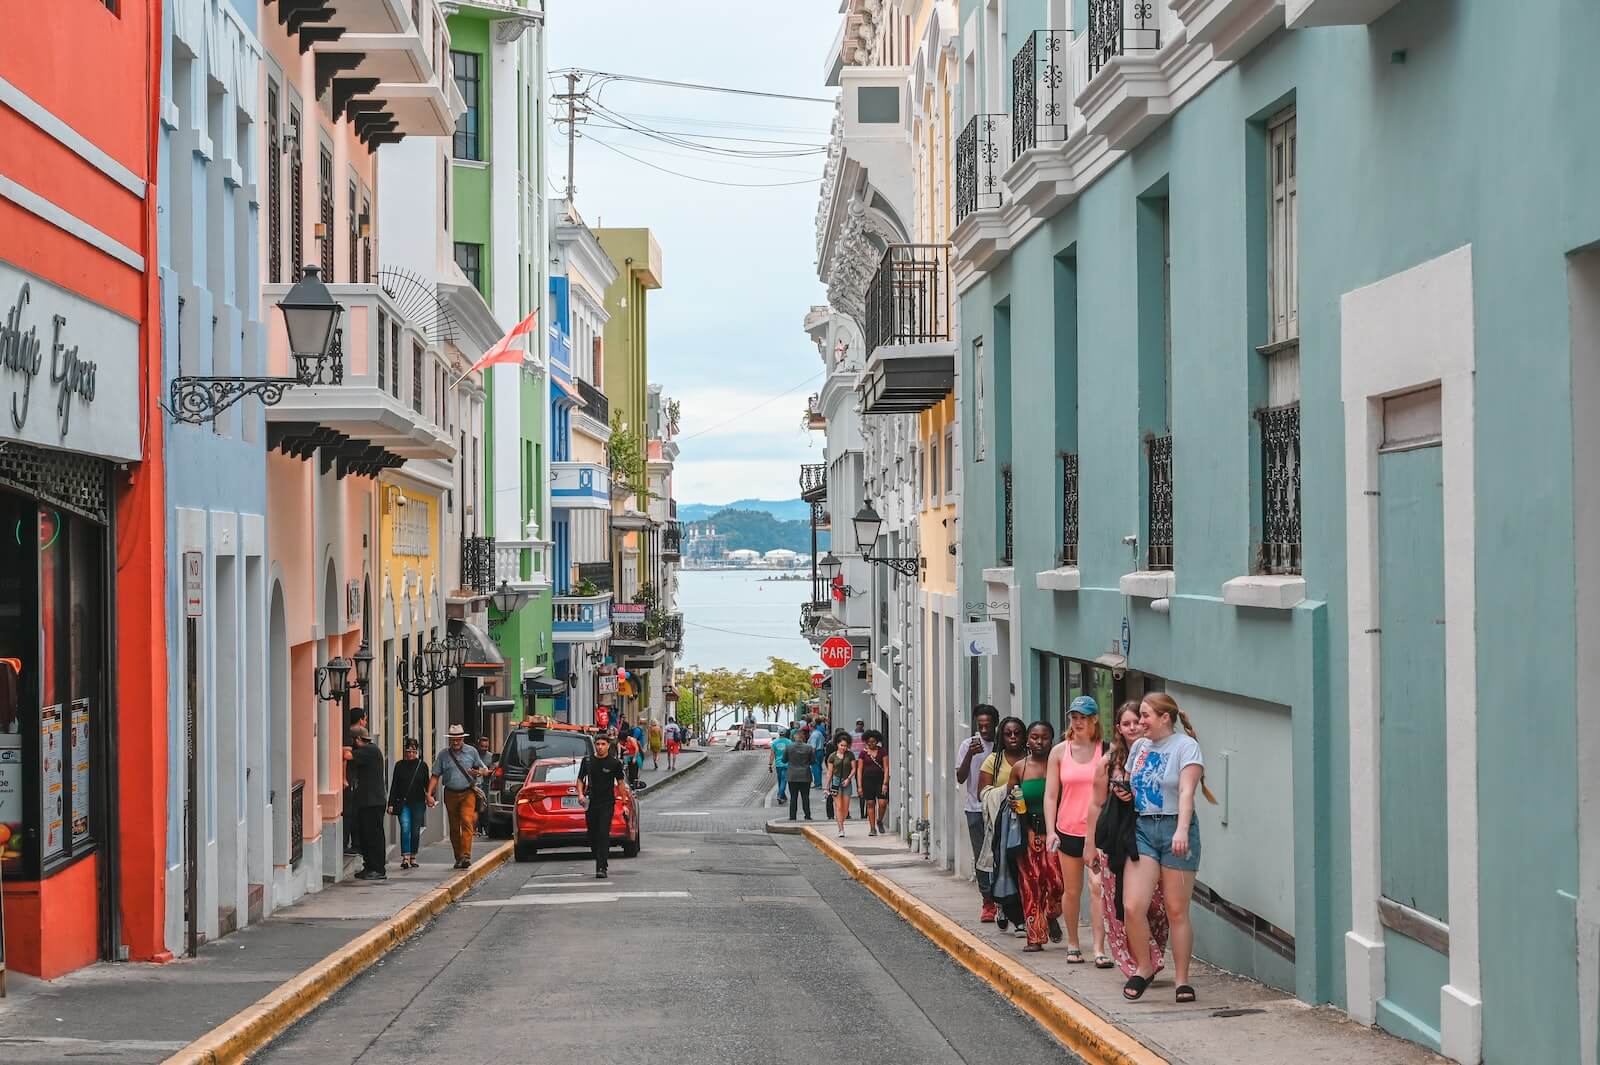 A street in Old San Juan, Puerto Rico